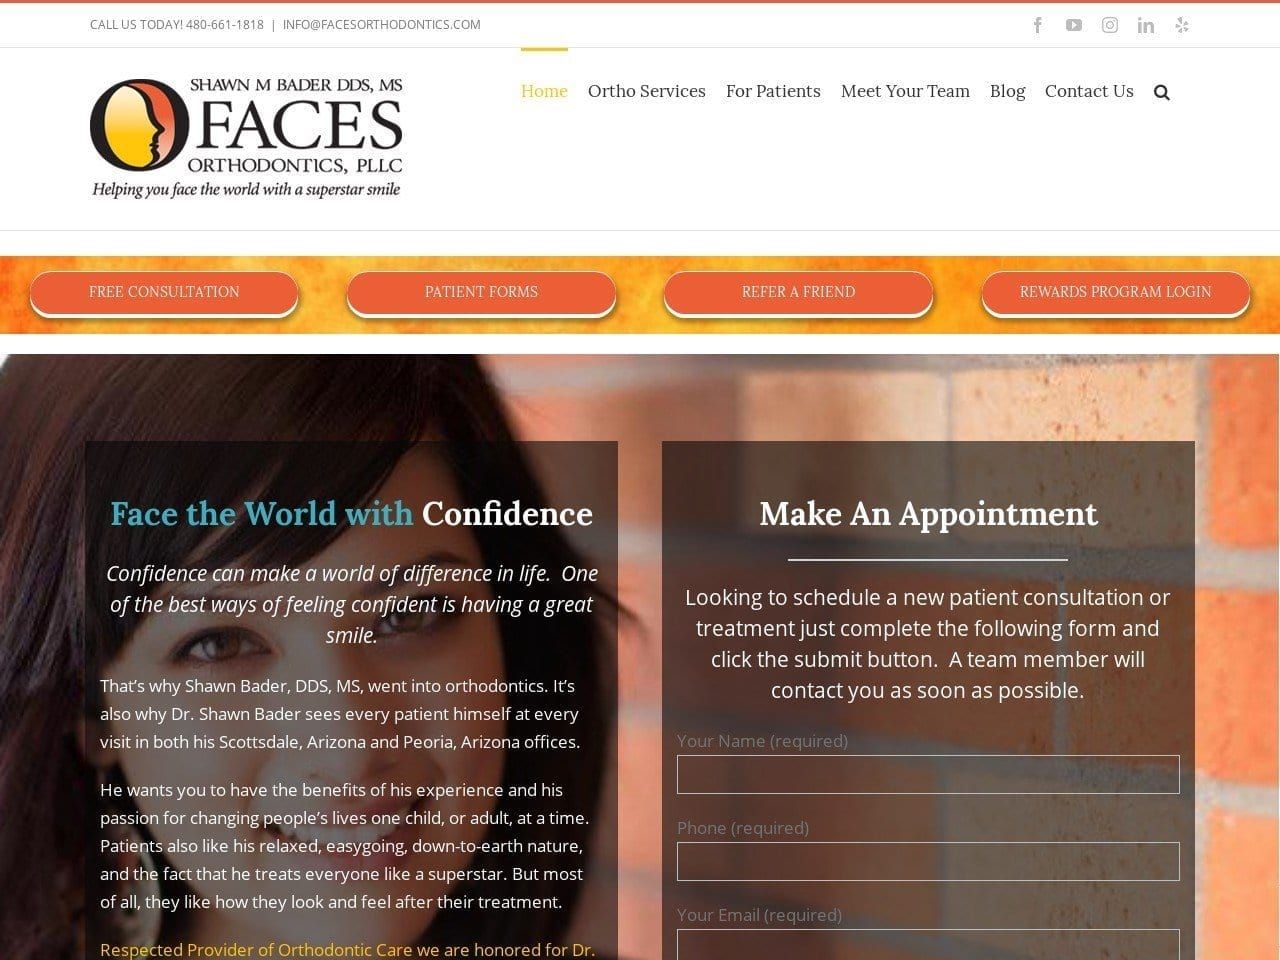 Dr. Shawn M. Bader DDS Website Screenshot from facesorthodontics.com